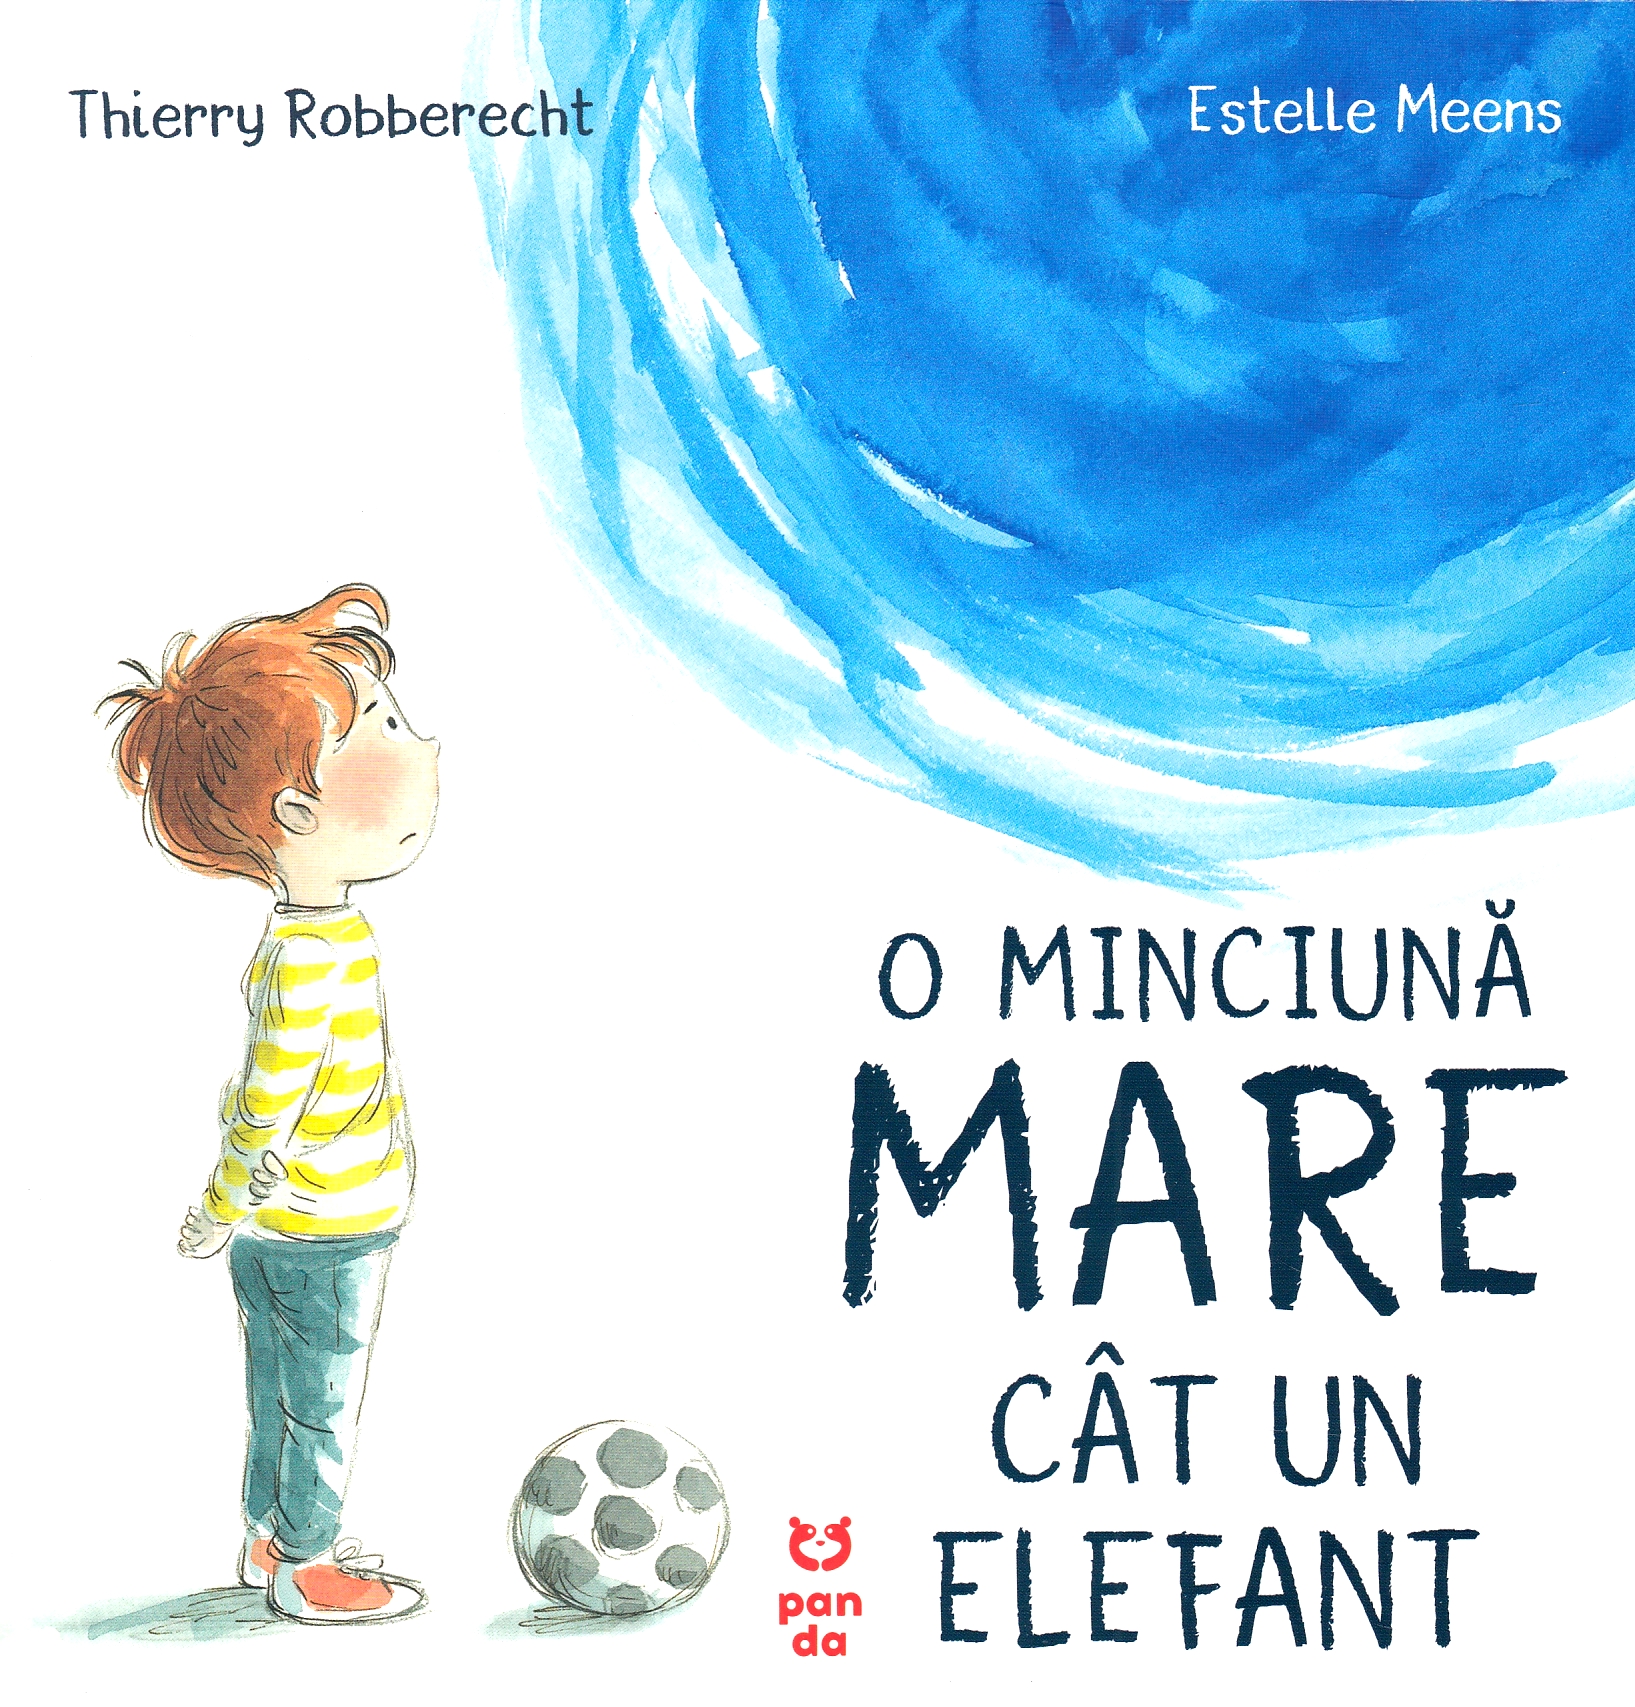 O minciuna mare cat un elefant - Thierry Robberecht, Estelle Meens